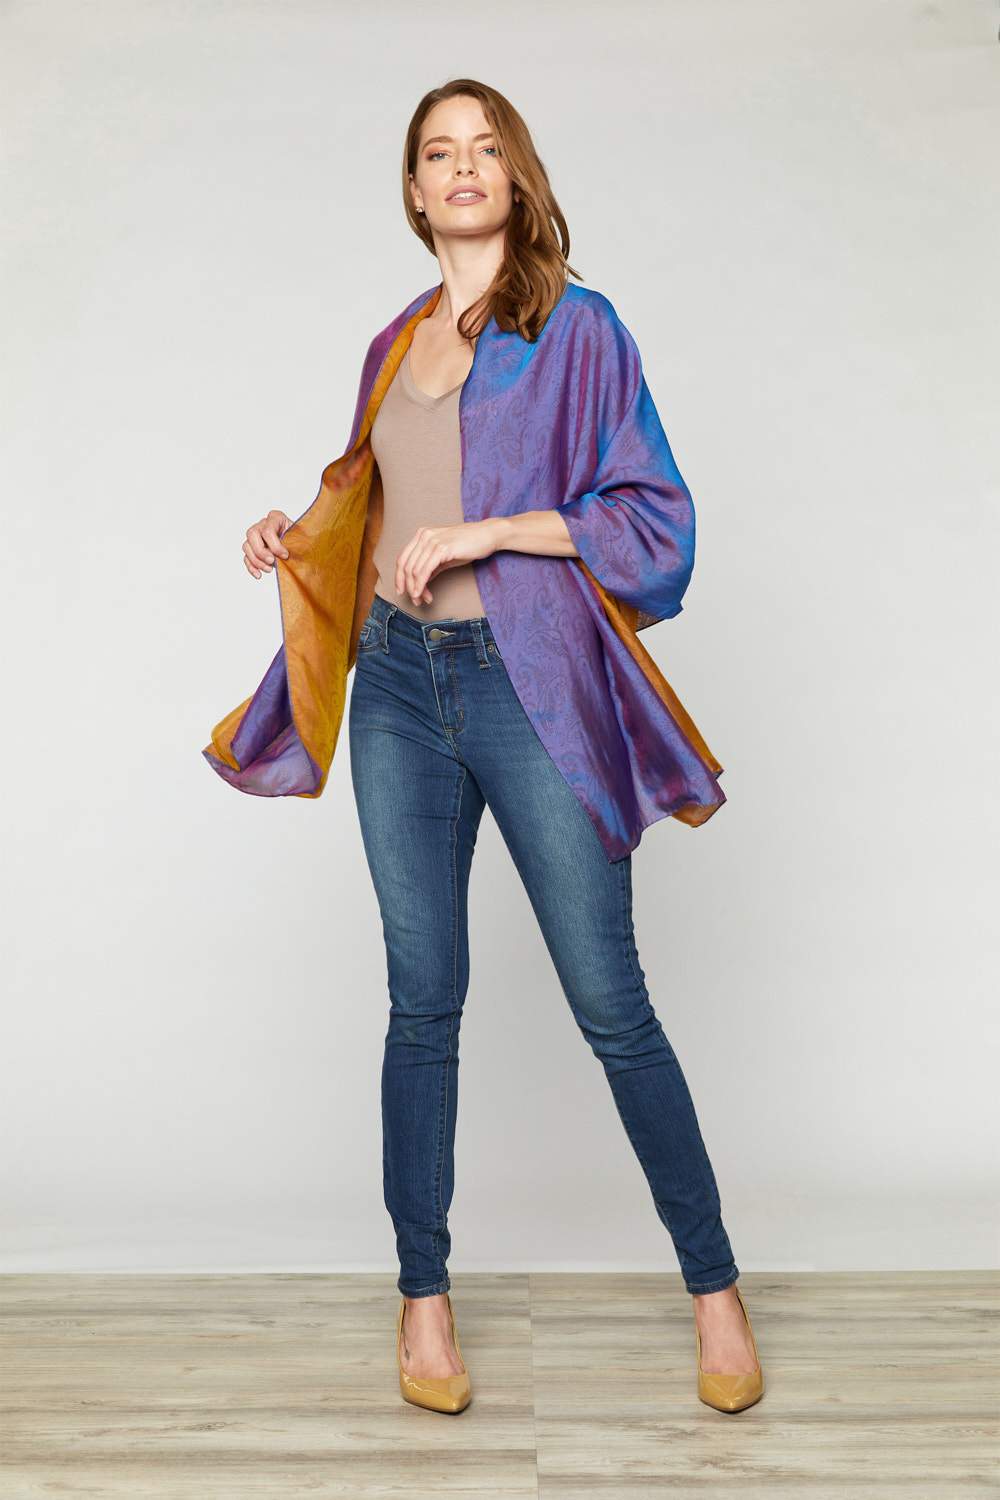 Lights Sorrento Blue and Orange Cashmere Print Silk Scarf Italian Fashion — Shops From